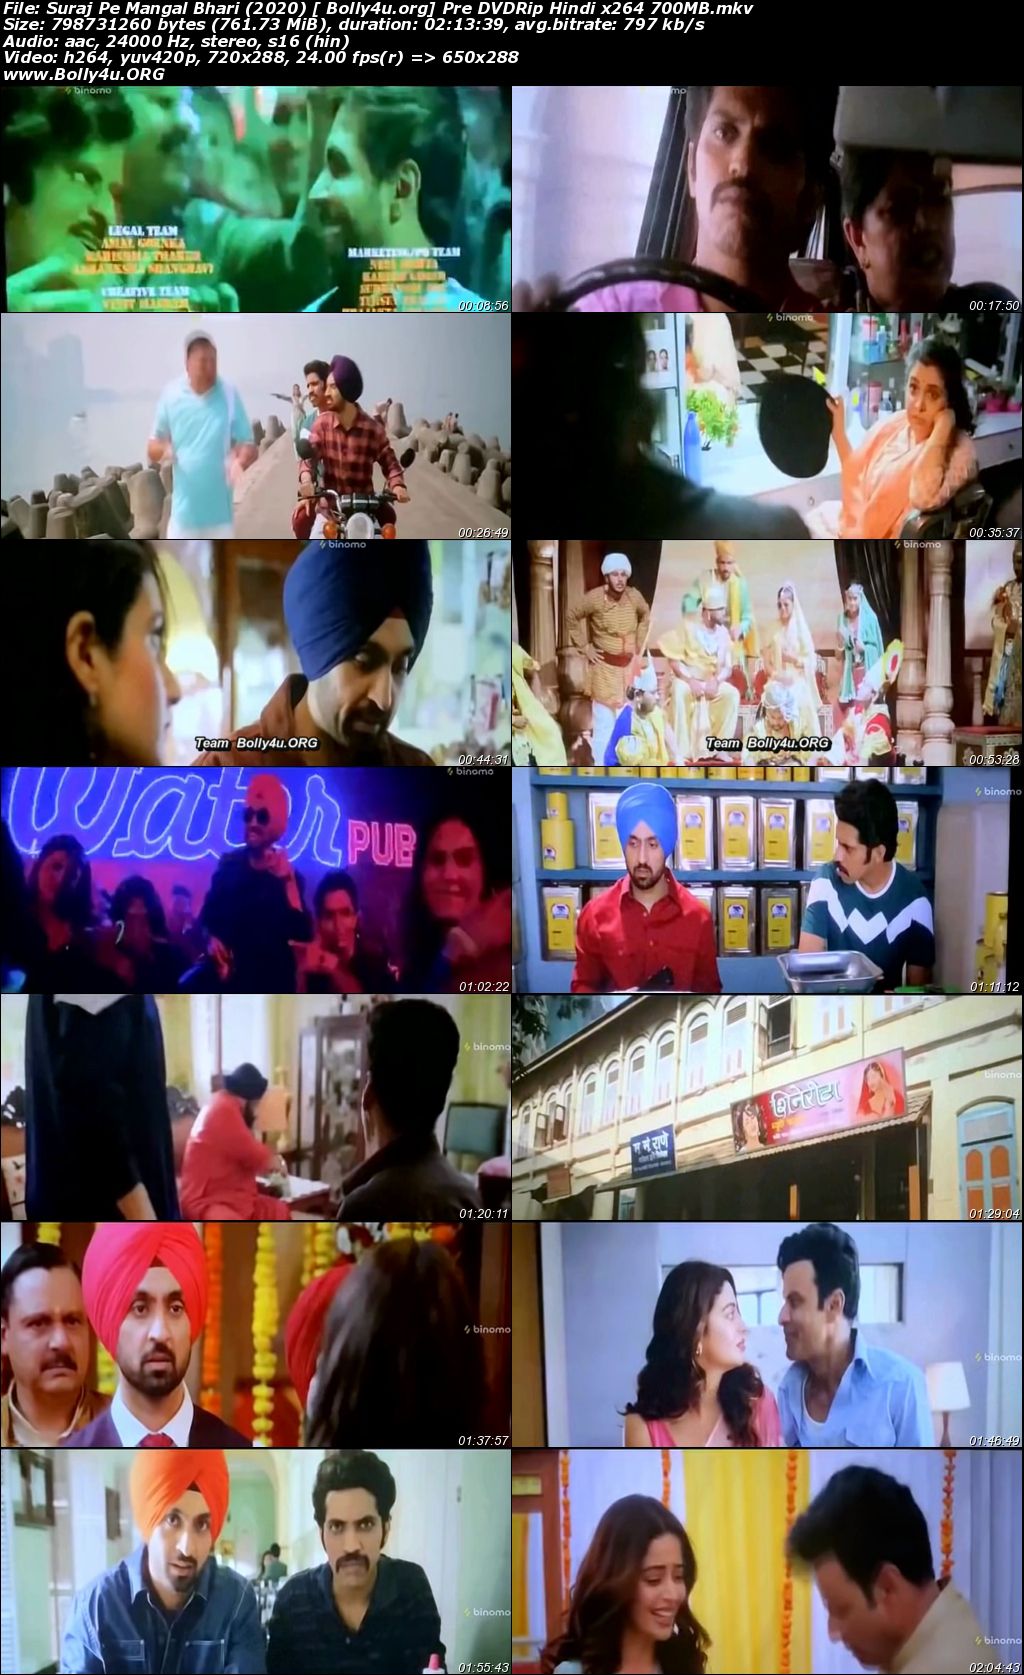 Suraj Pe Mangal Bhari 2020 Pre DVDRip 700MB Hindi Movie x264 Download